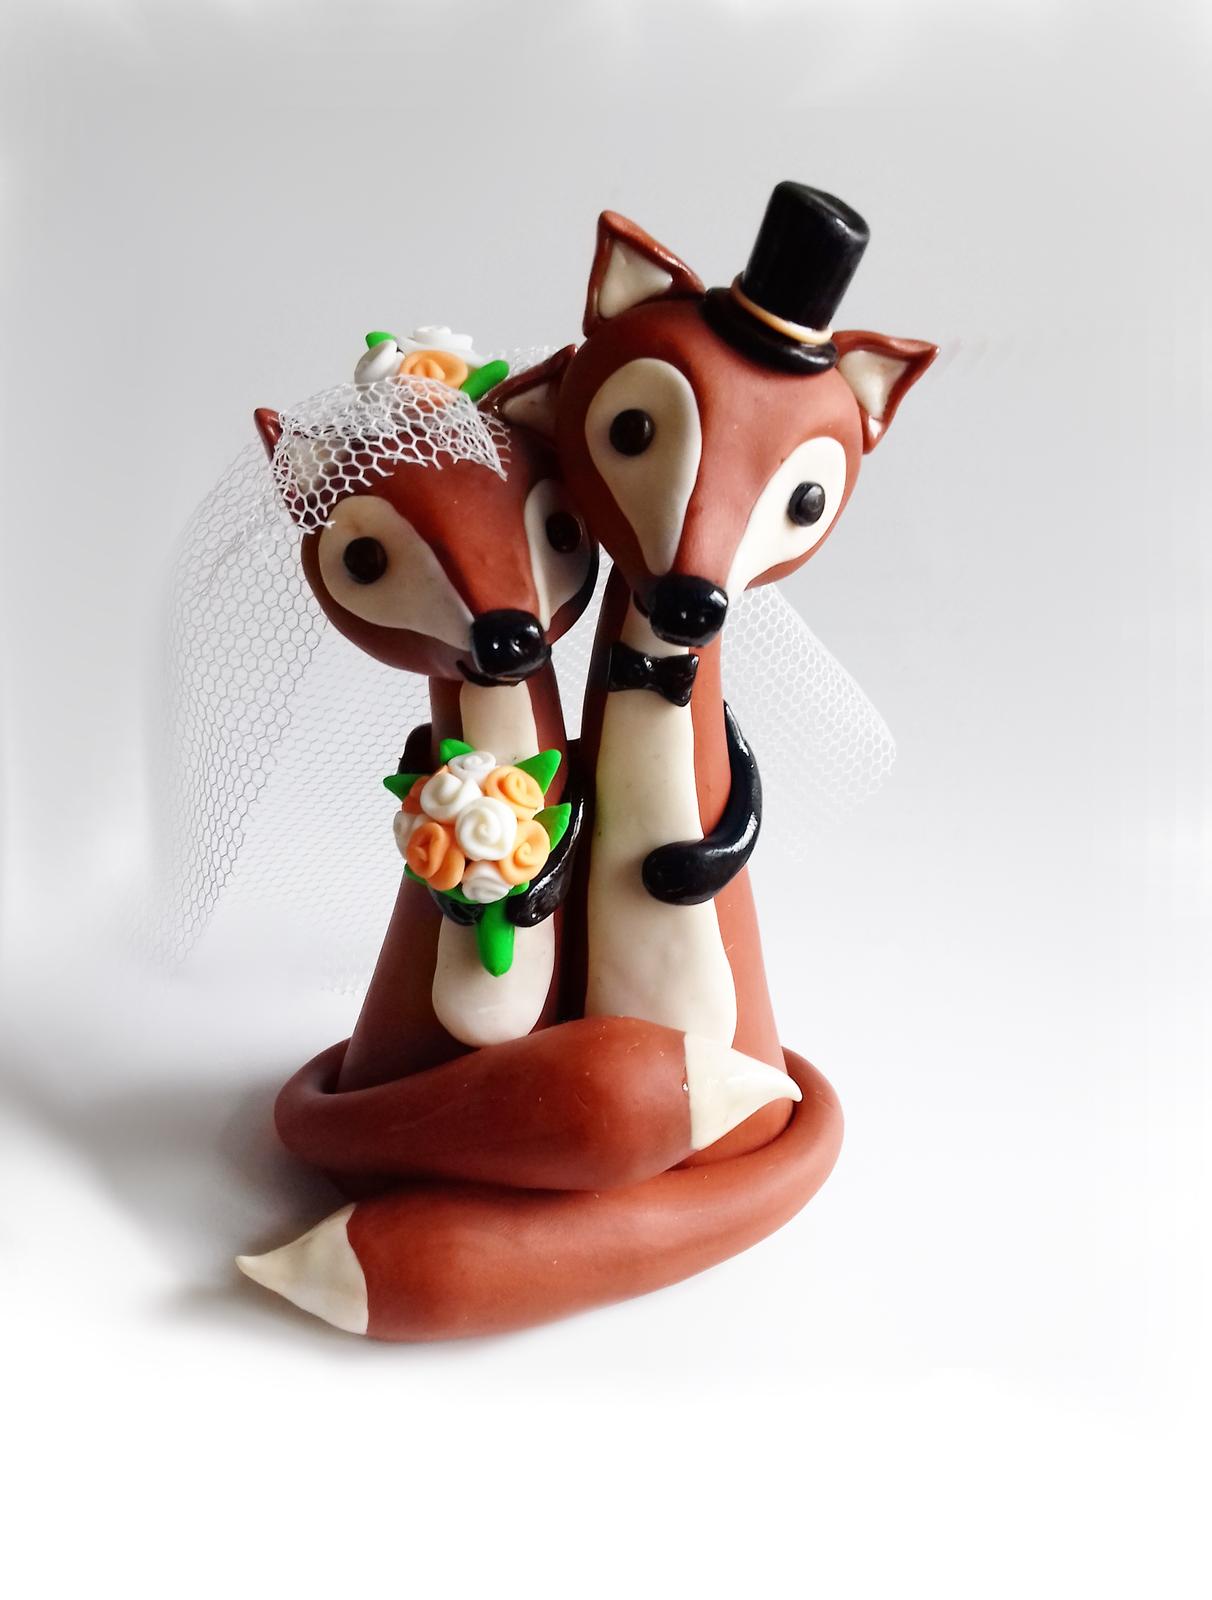 Svatební figurky - https://www.fler.cz/zbozi/liskovi-figurky-na-svatebni-dort-9368347?pos=4